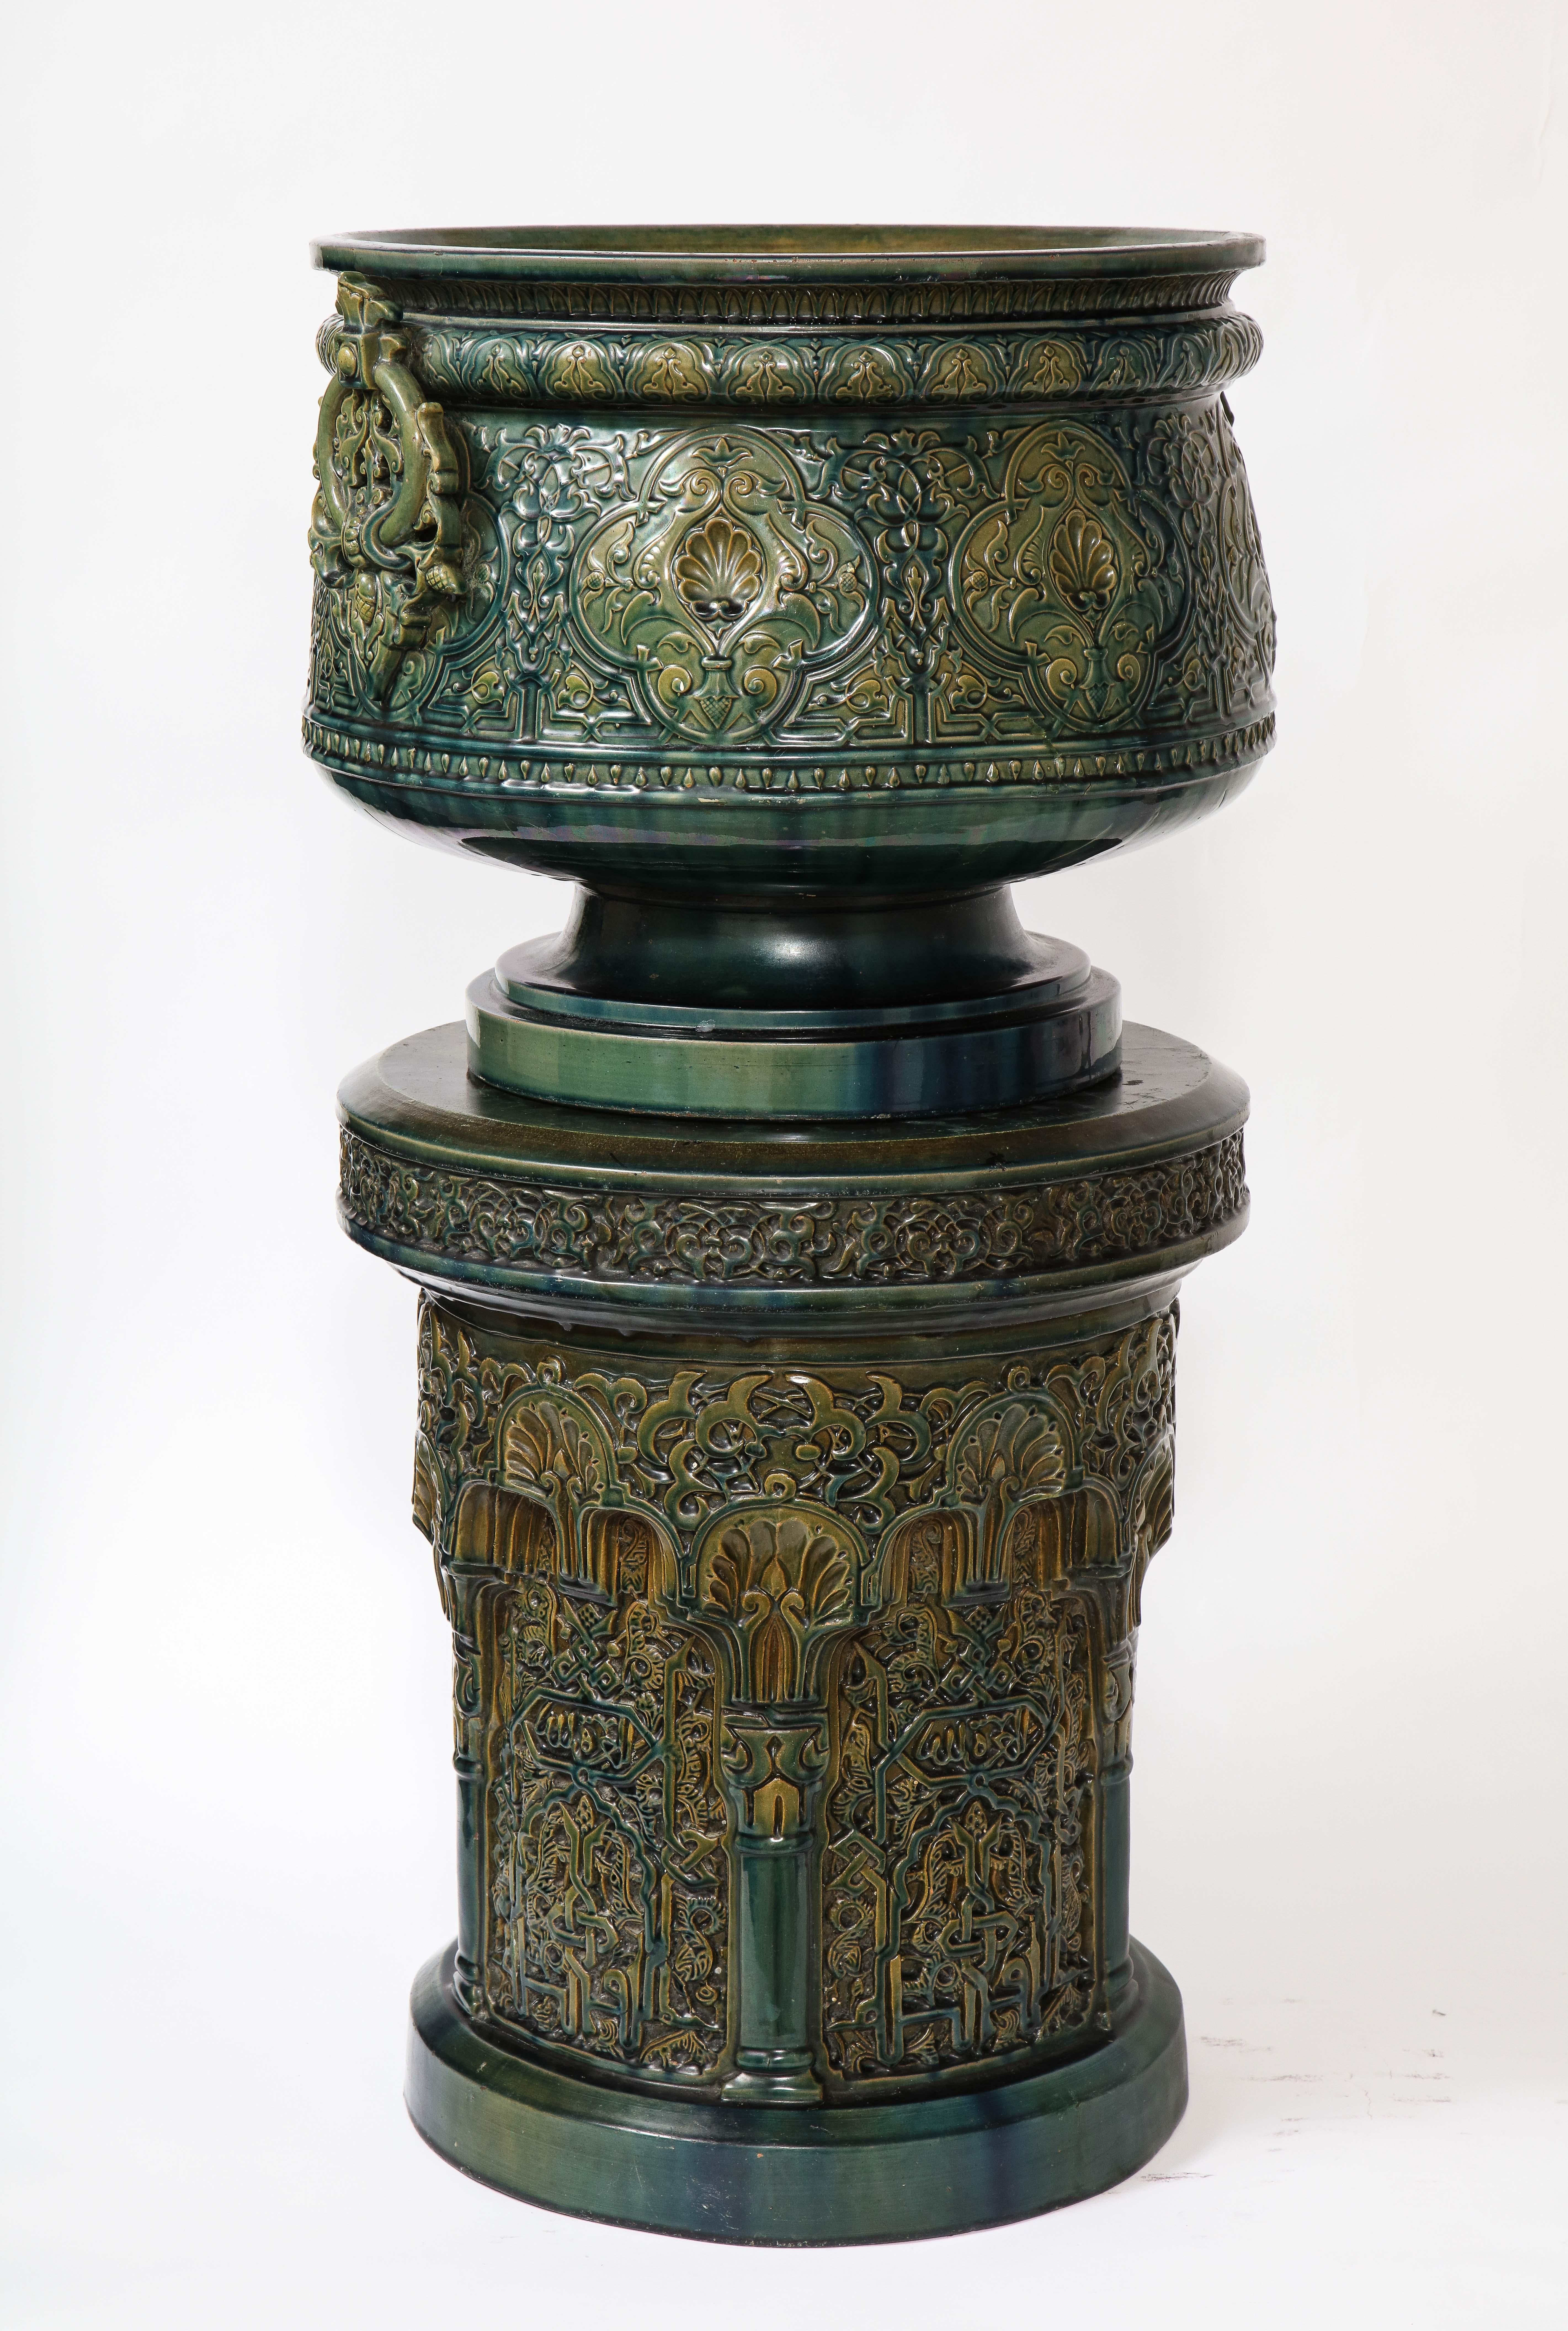 Enameled Theodore Deck Islamic/Alhambra Style Green-Glazed Earthenware Vase on Pedestal